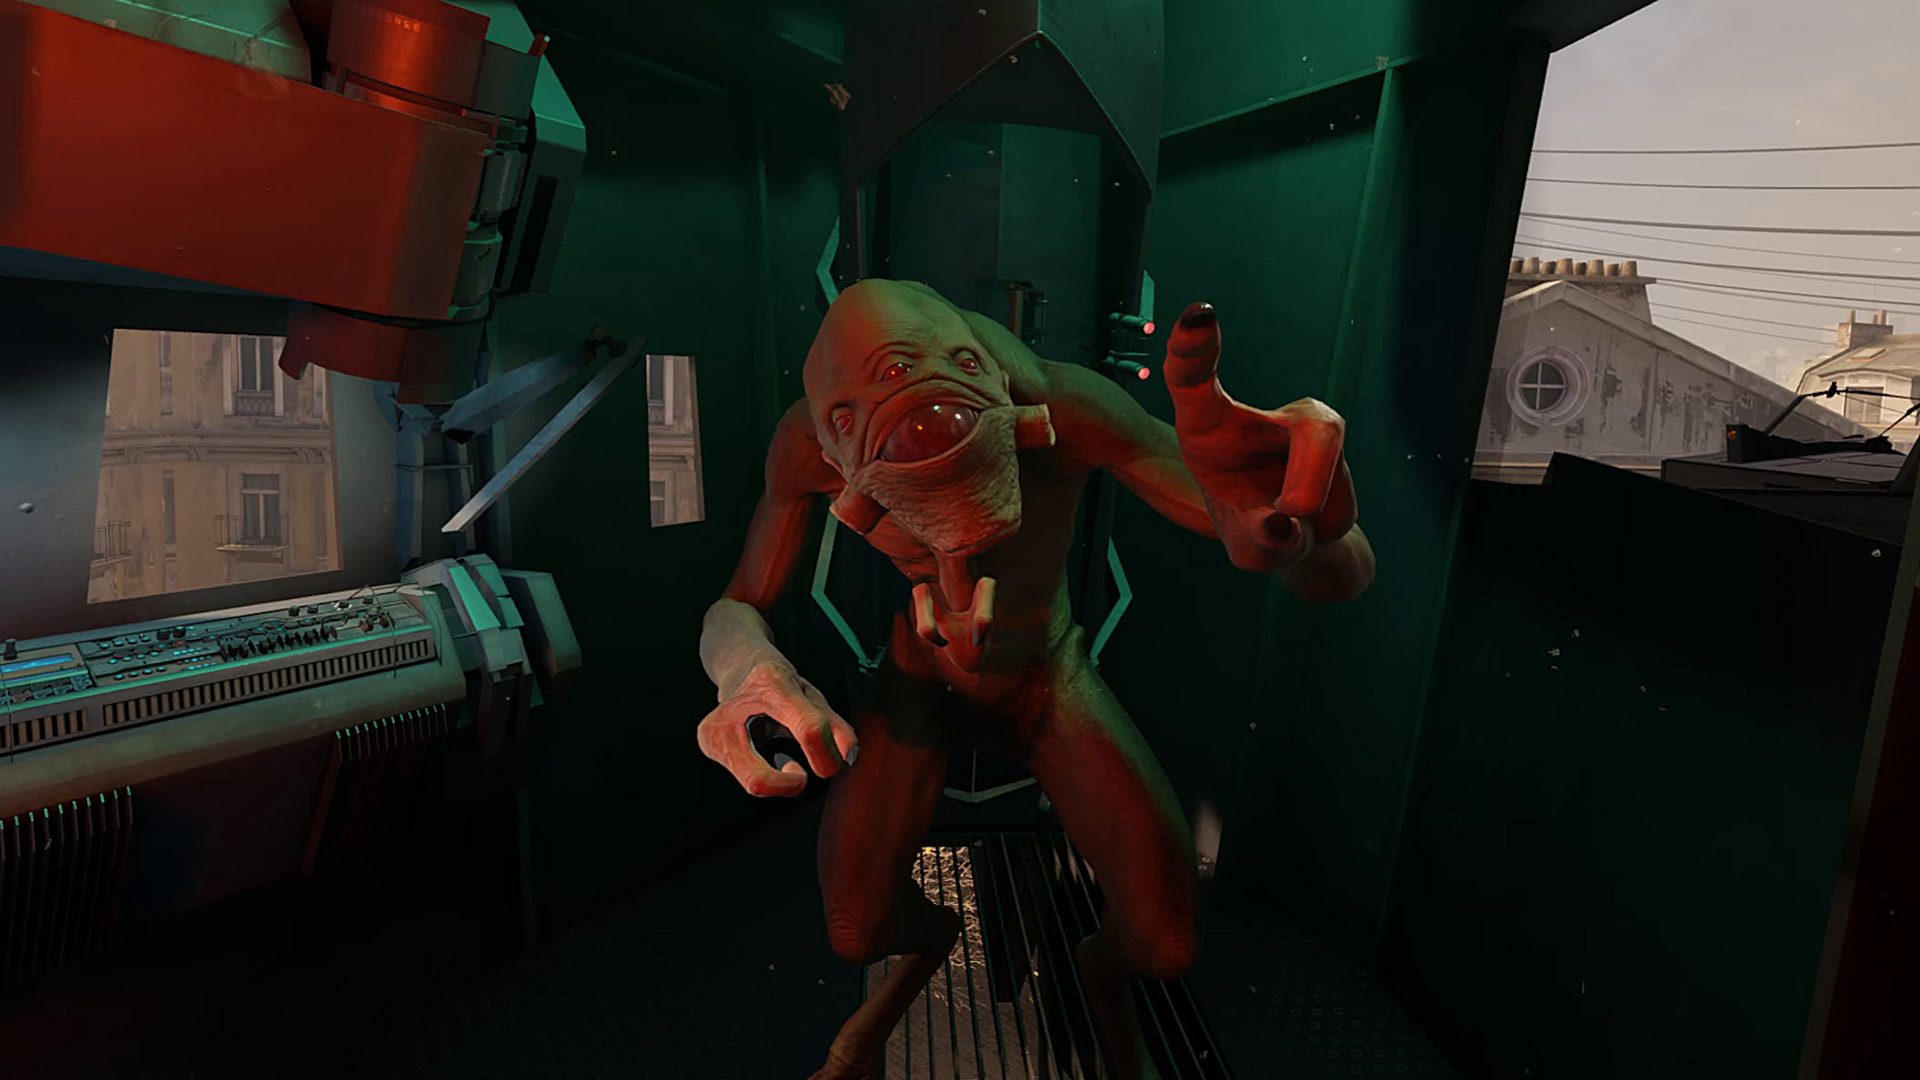 Half-Life Alyx: Jump into an amazing VR adventure